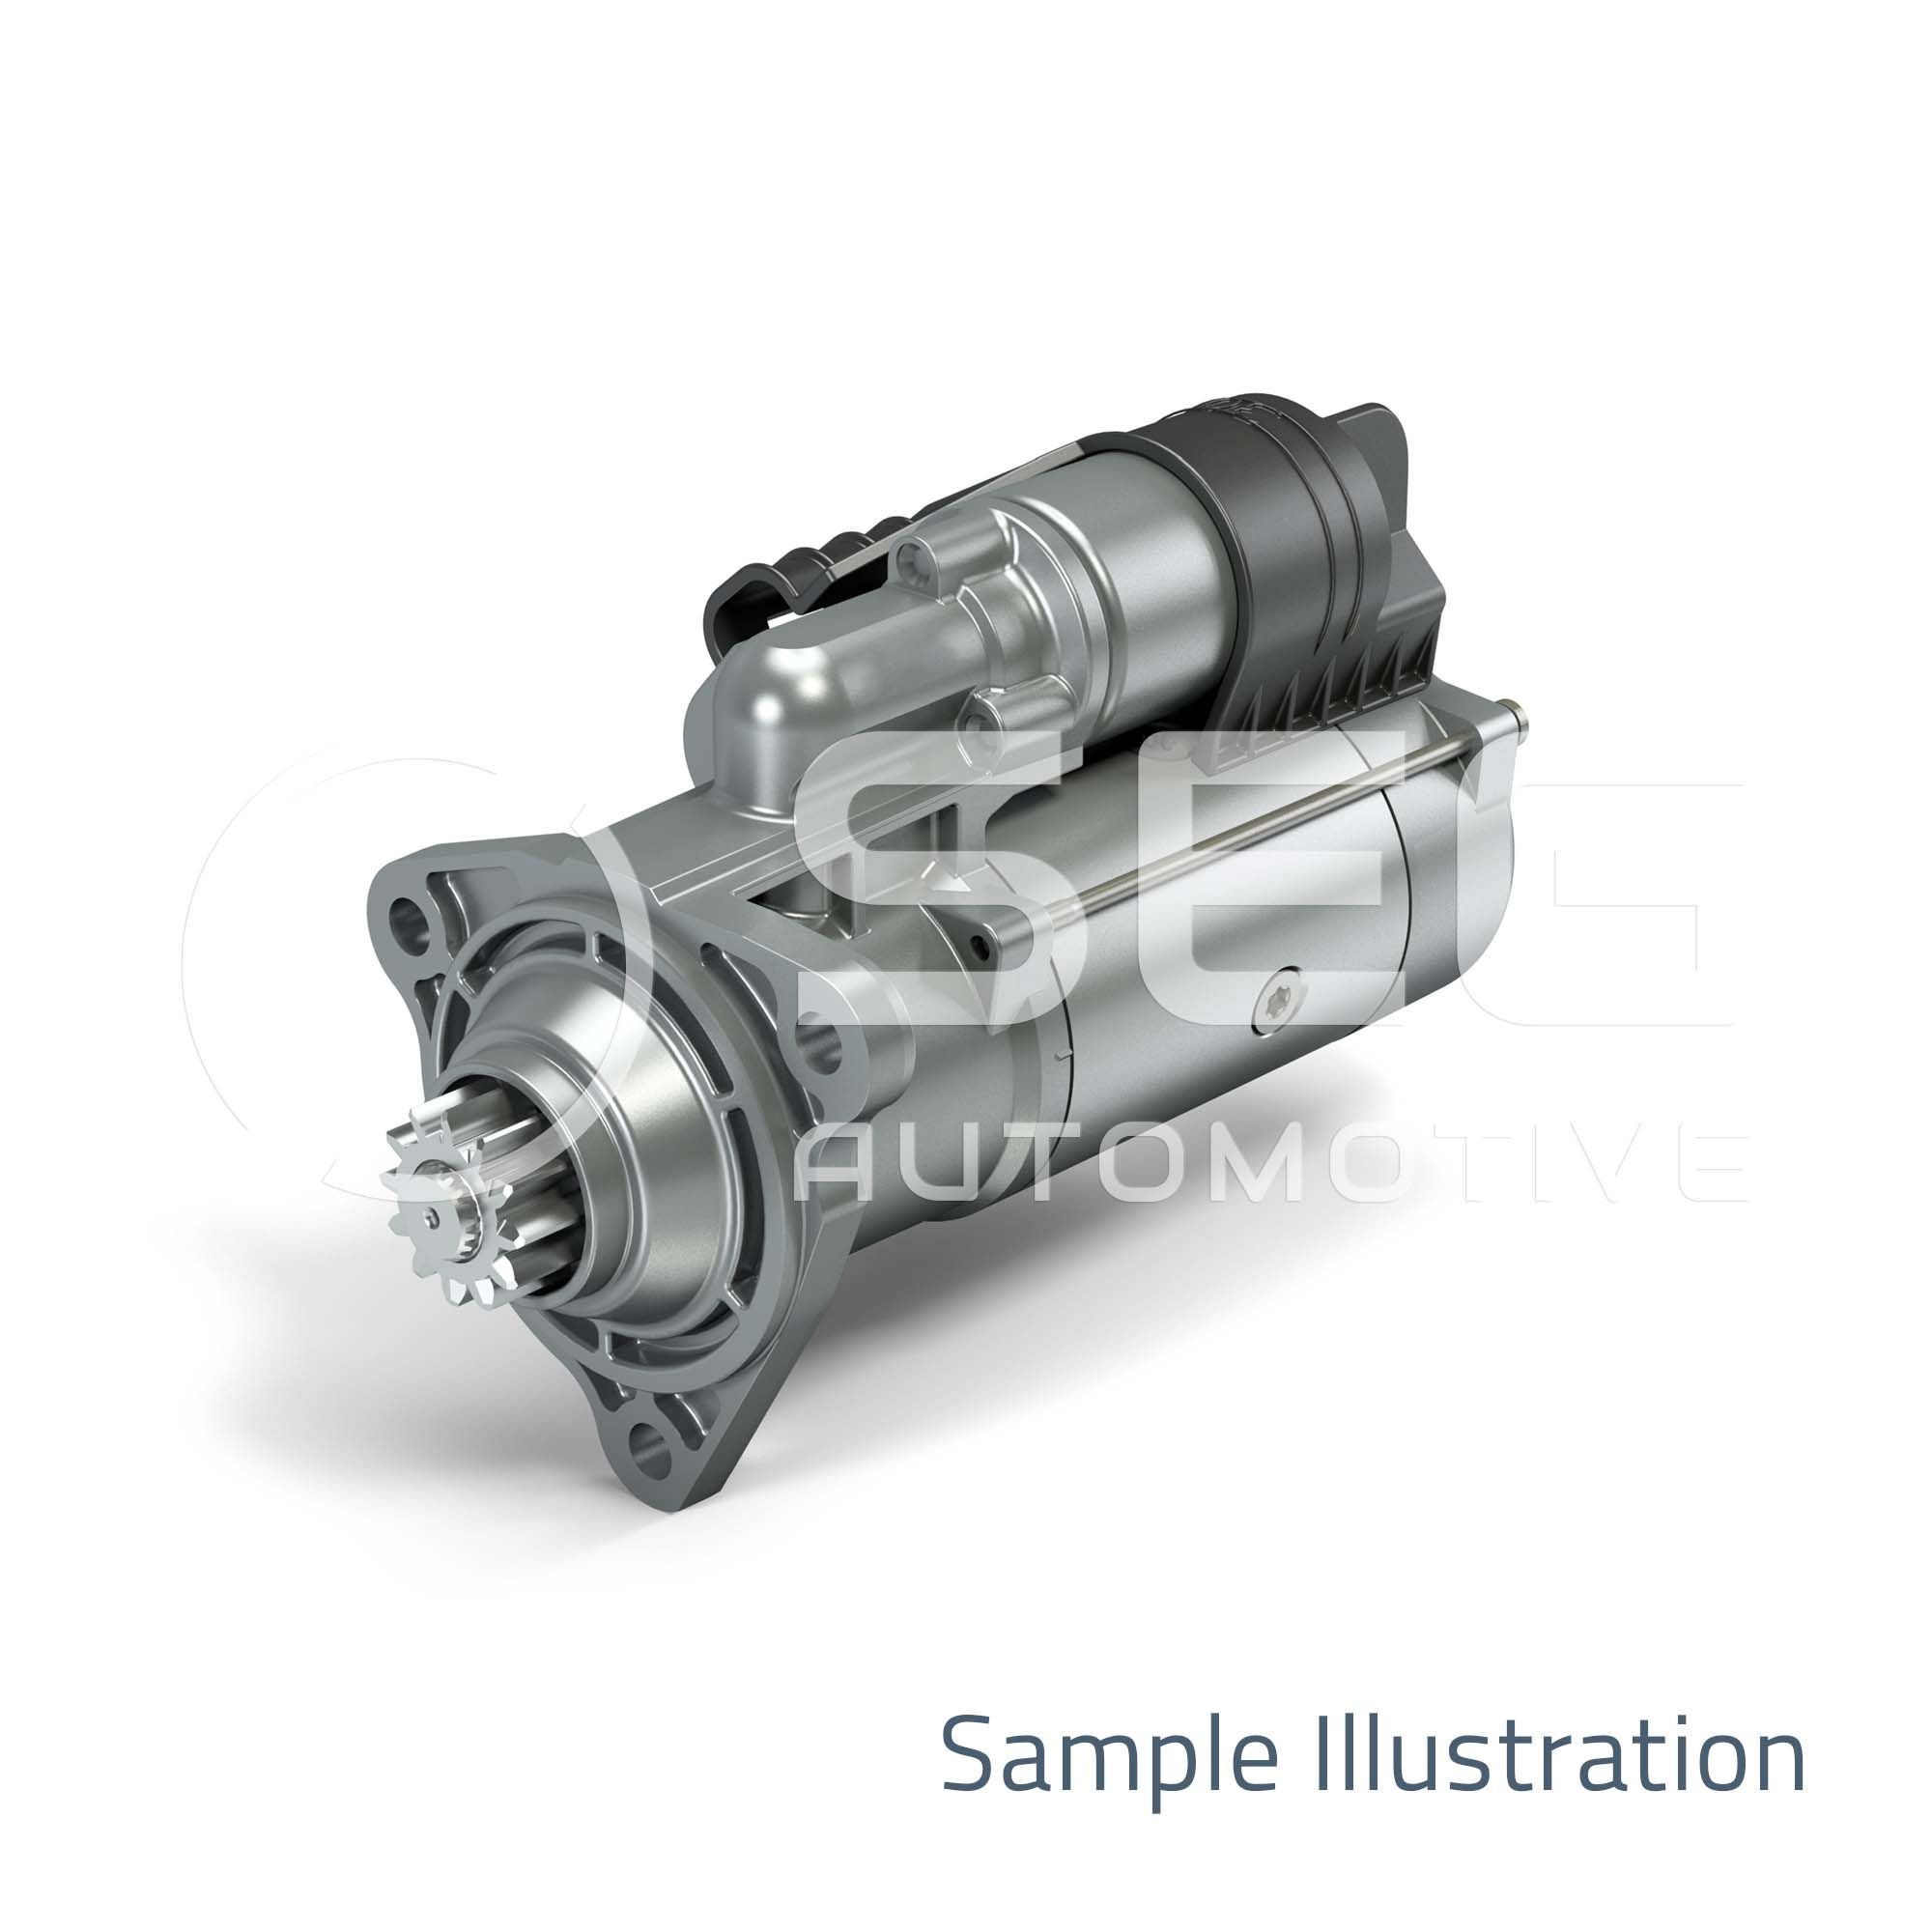 SEG Automotive 0001251006 Starter motor 500389863